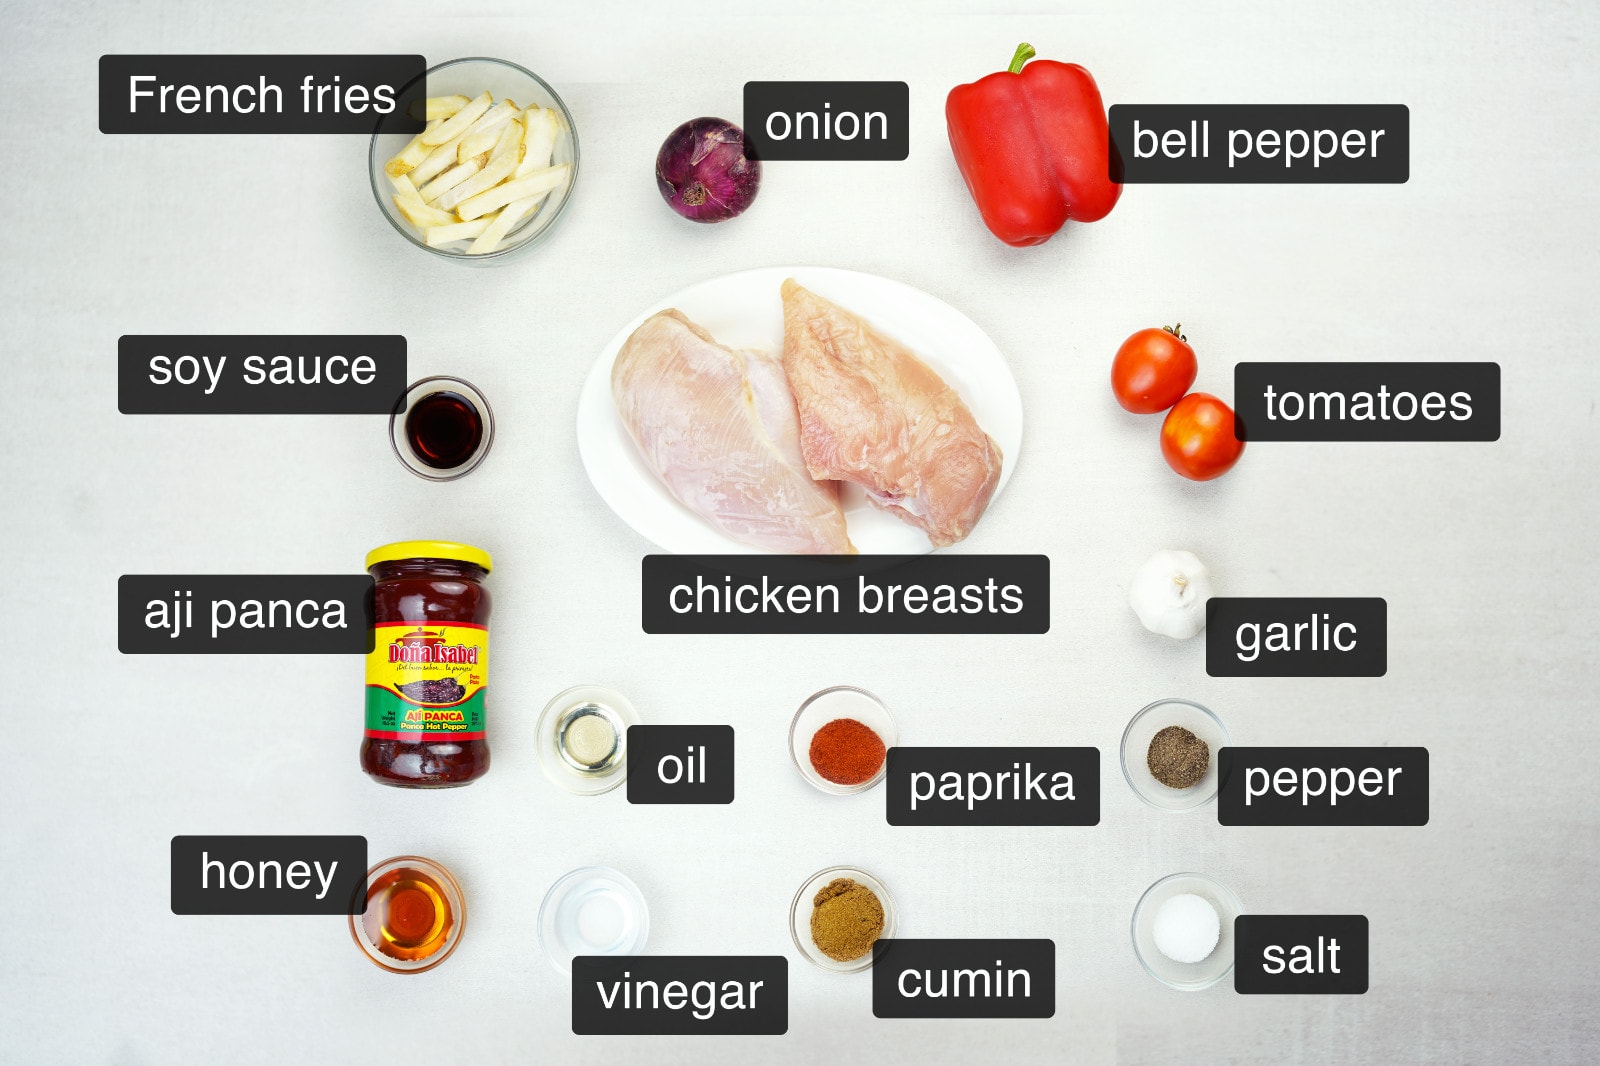 pollo saltado chicken stir fry ingredients